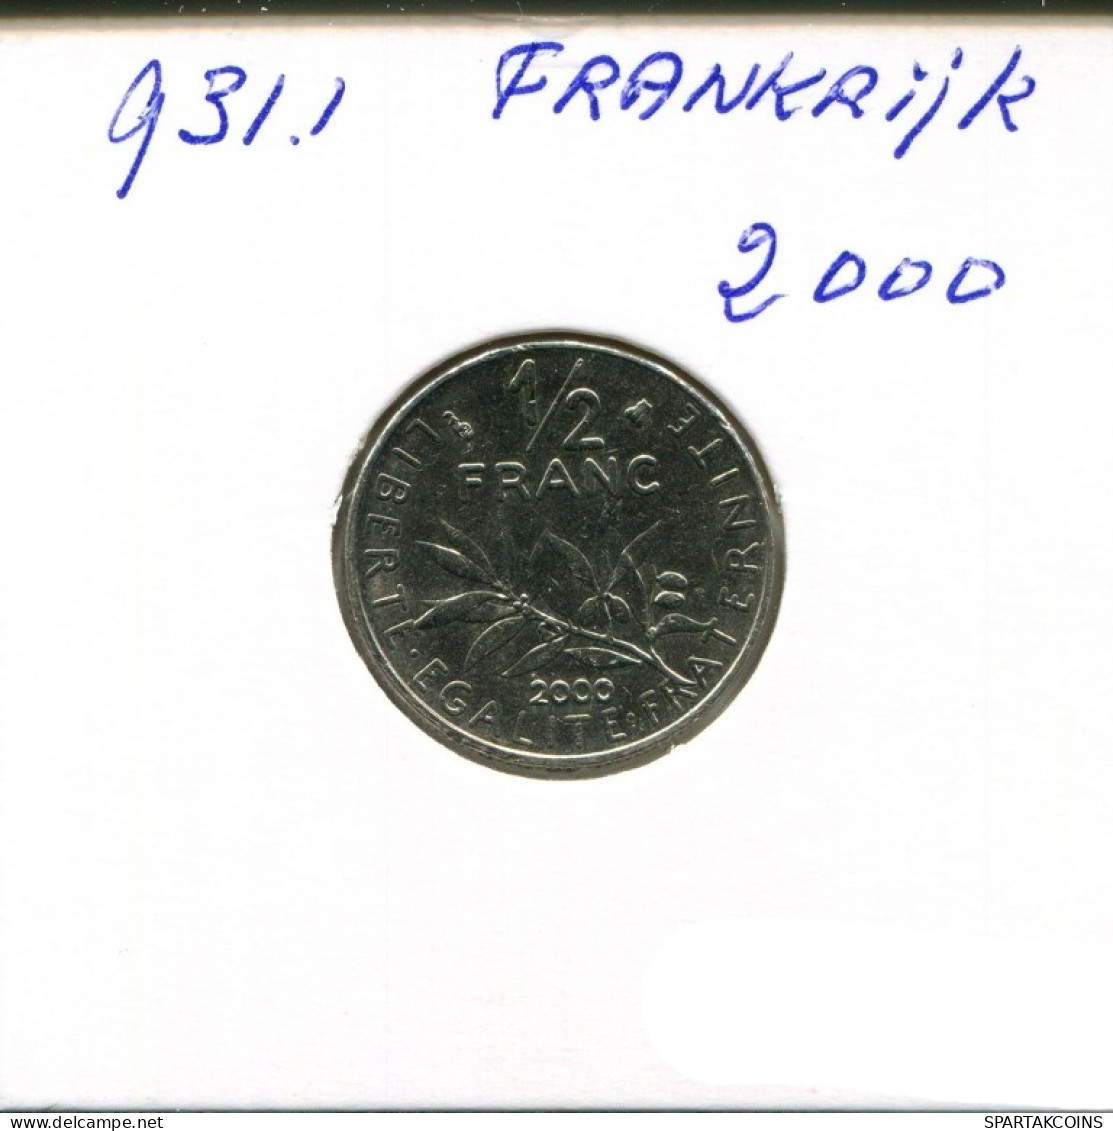 1/2 FRANC 2000 FRANCE Coin French Coin #AN259.U.A - 1/2 Franc